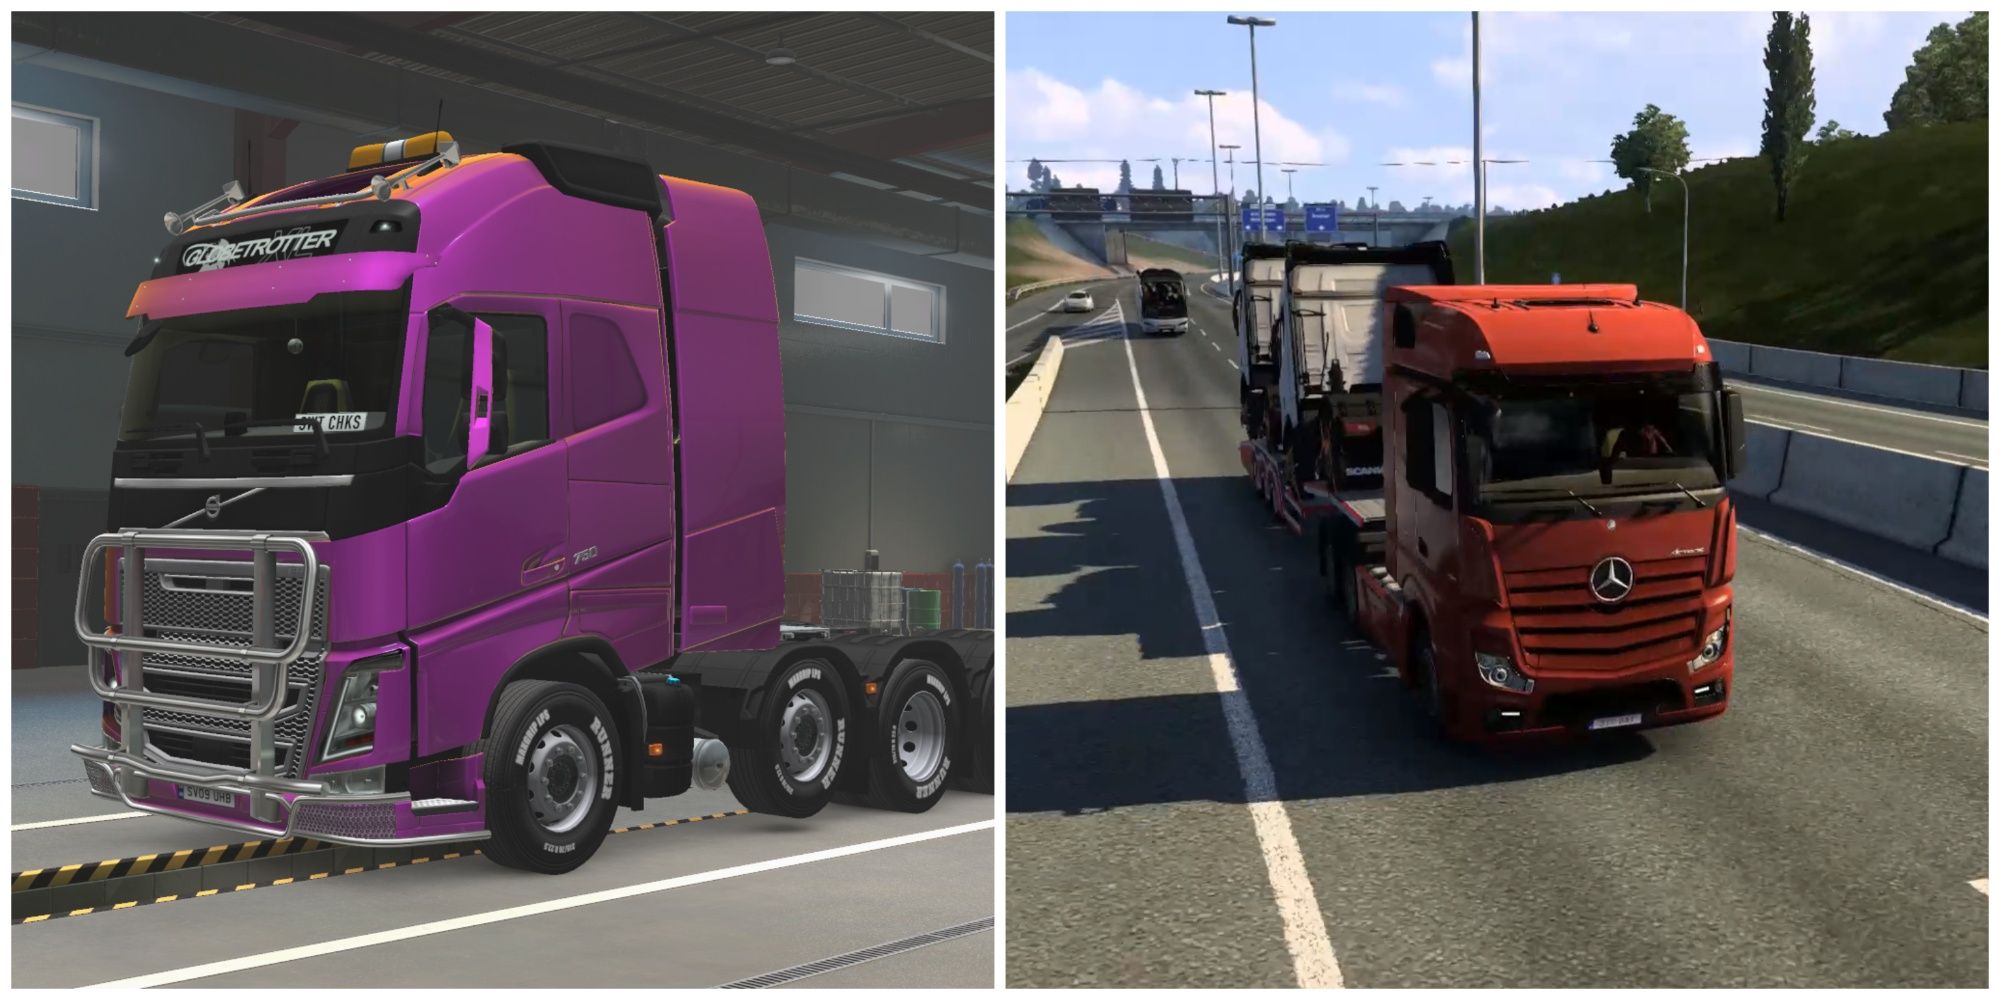 Euro Truck Simulator 2 - Volvo Construction Equipment at the best